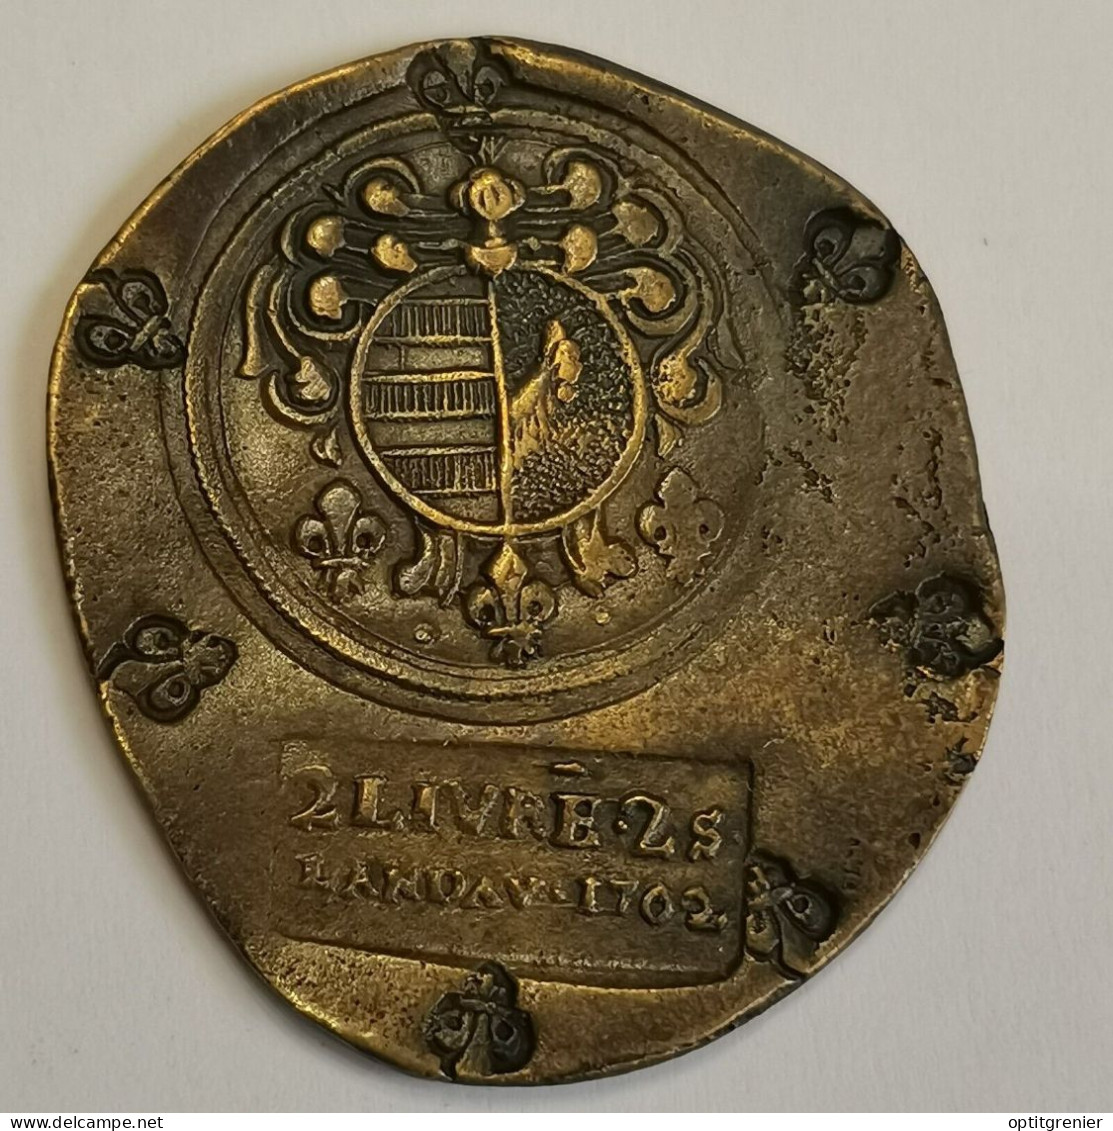 Monnaie Obsidionale Siège De LANDAU 1702 2 LIVRE 2 SOL / FRANCE - Sammlungen